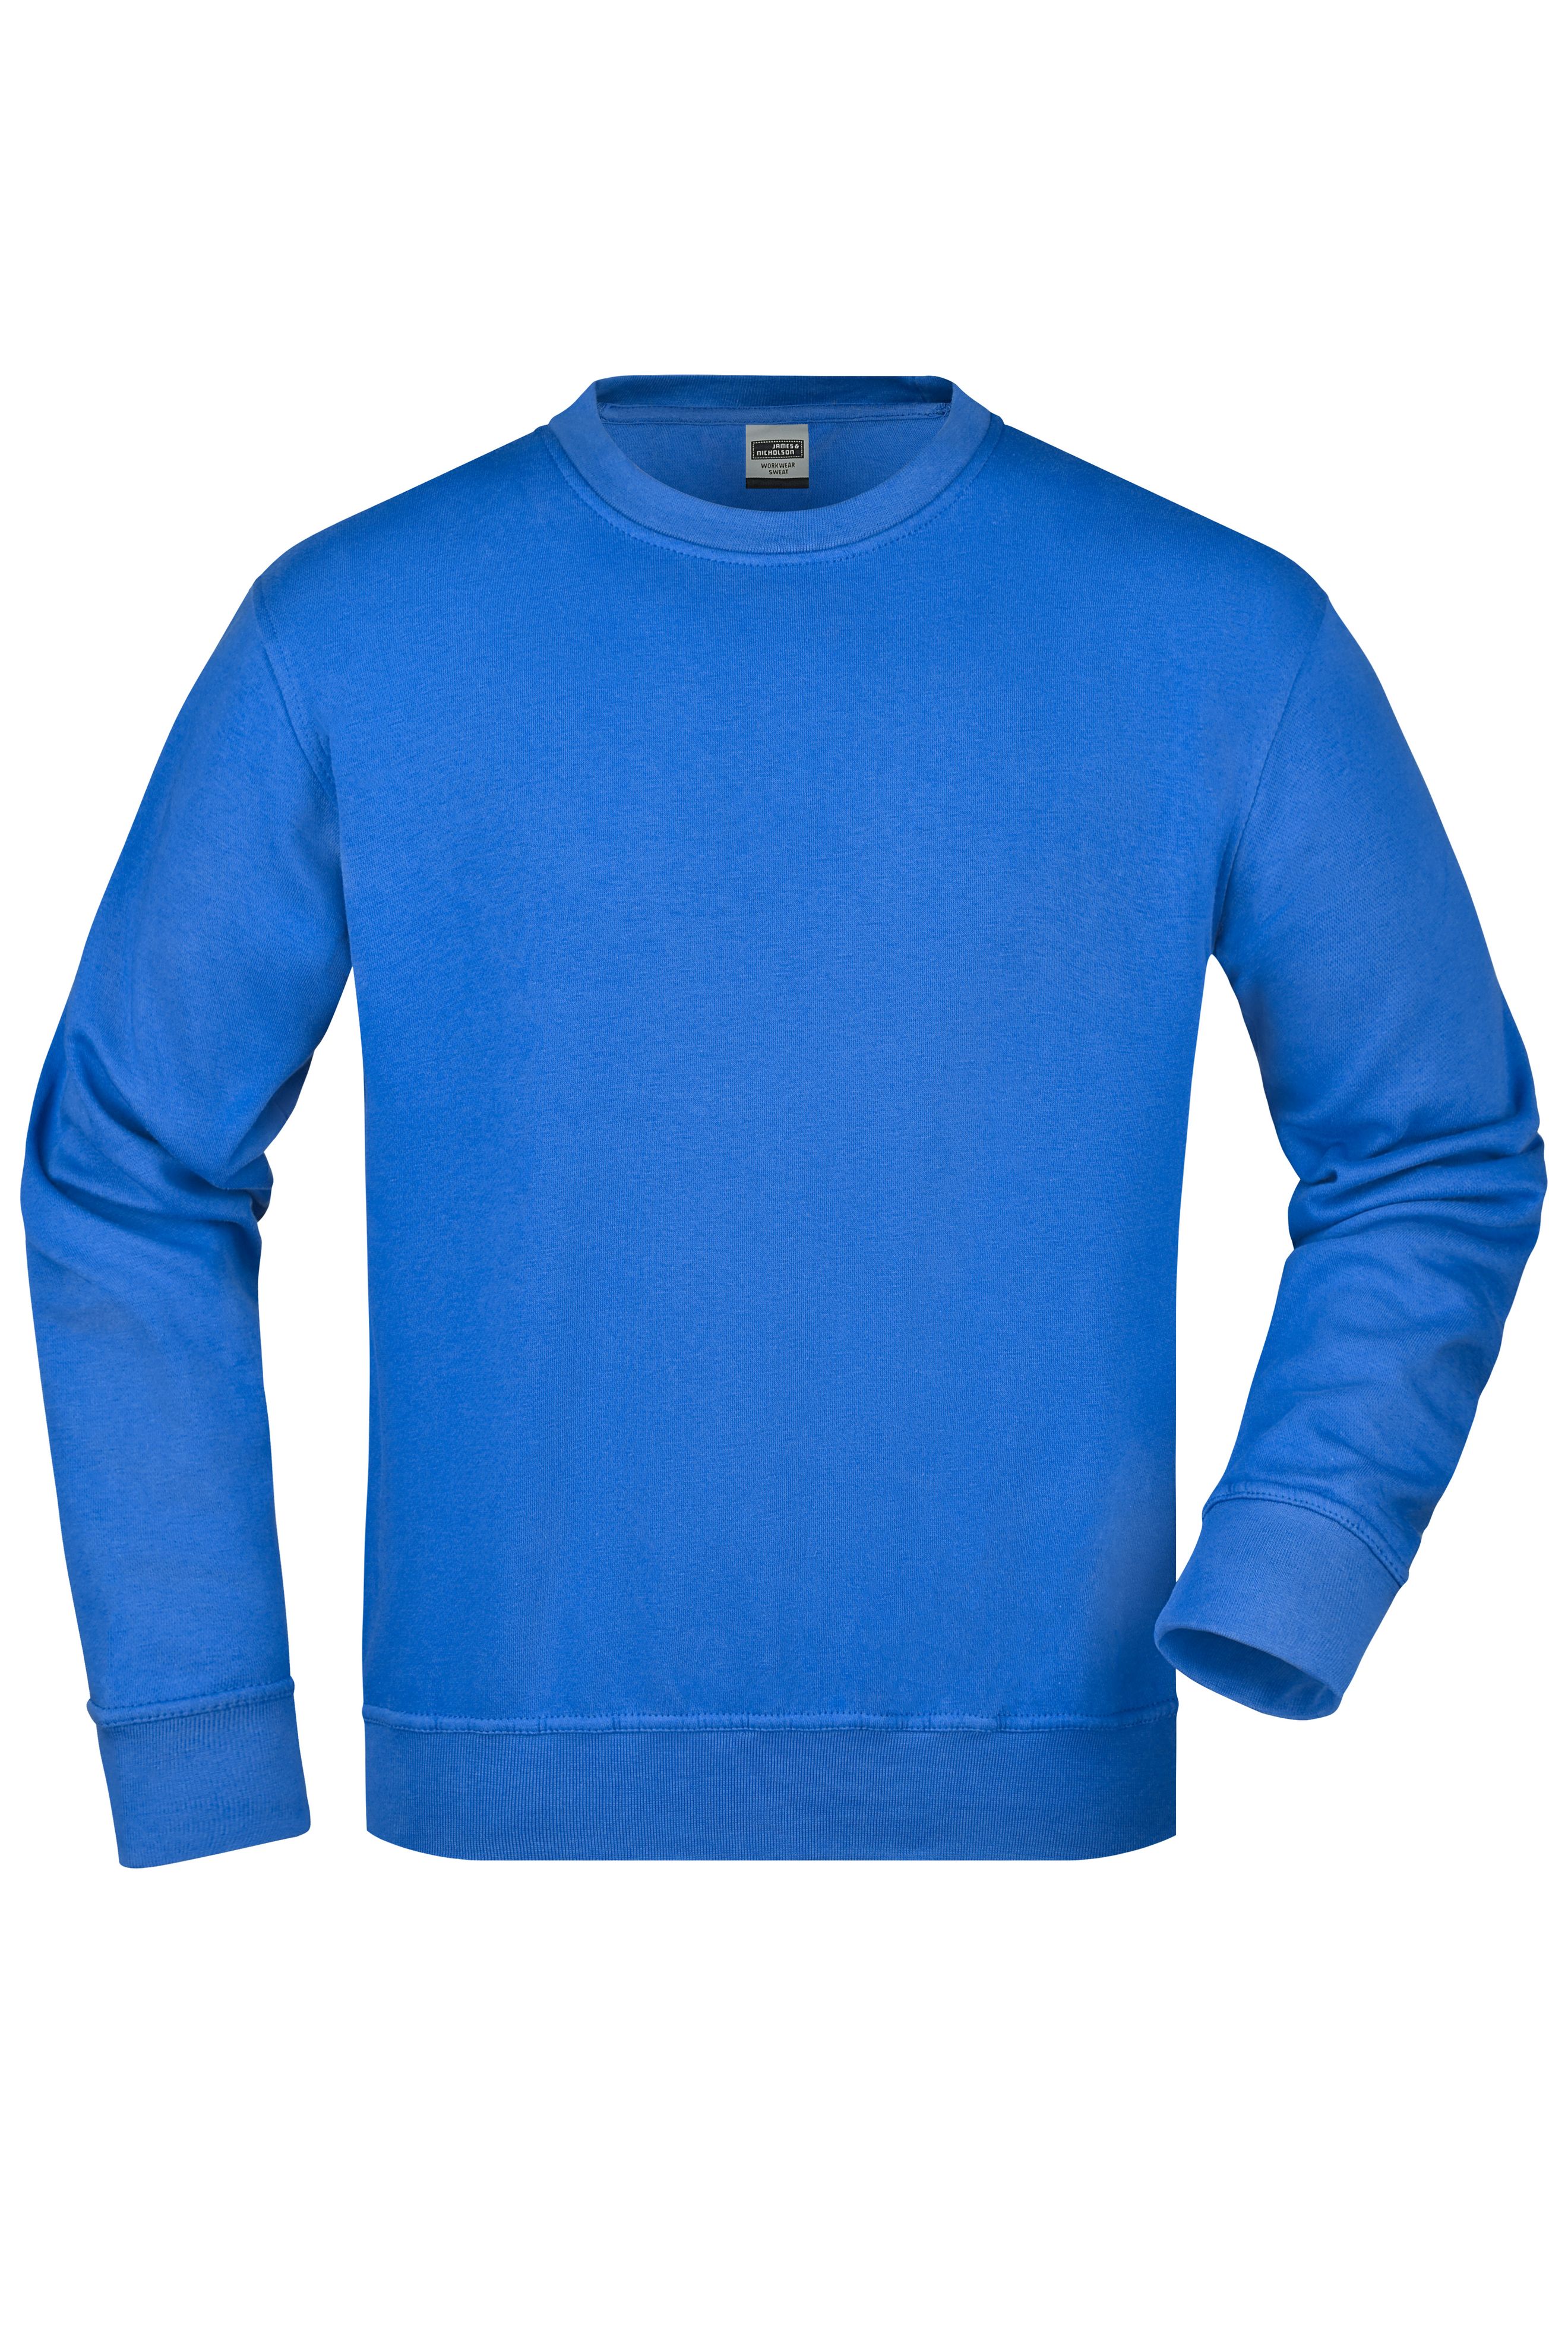 Unisex Workwear Sweatshirt Royal-Promotextilien.de